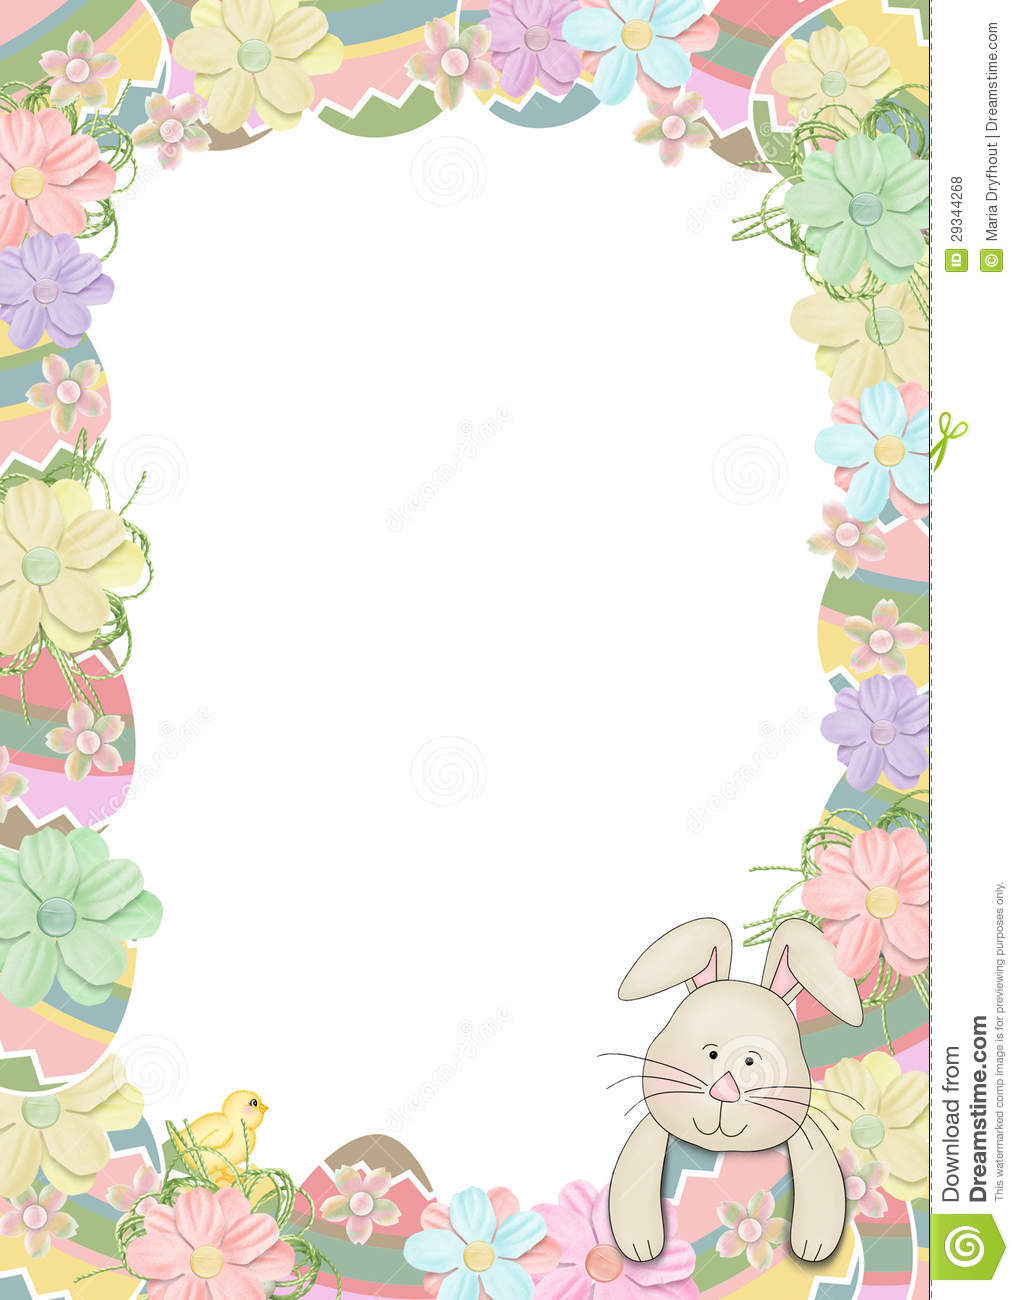 45+] Bunny Rabbit Wallpaper Border - WallpaperSafari